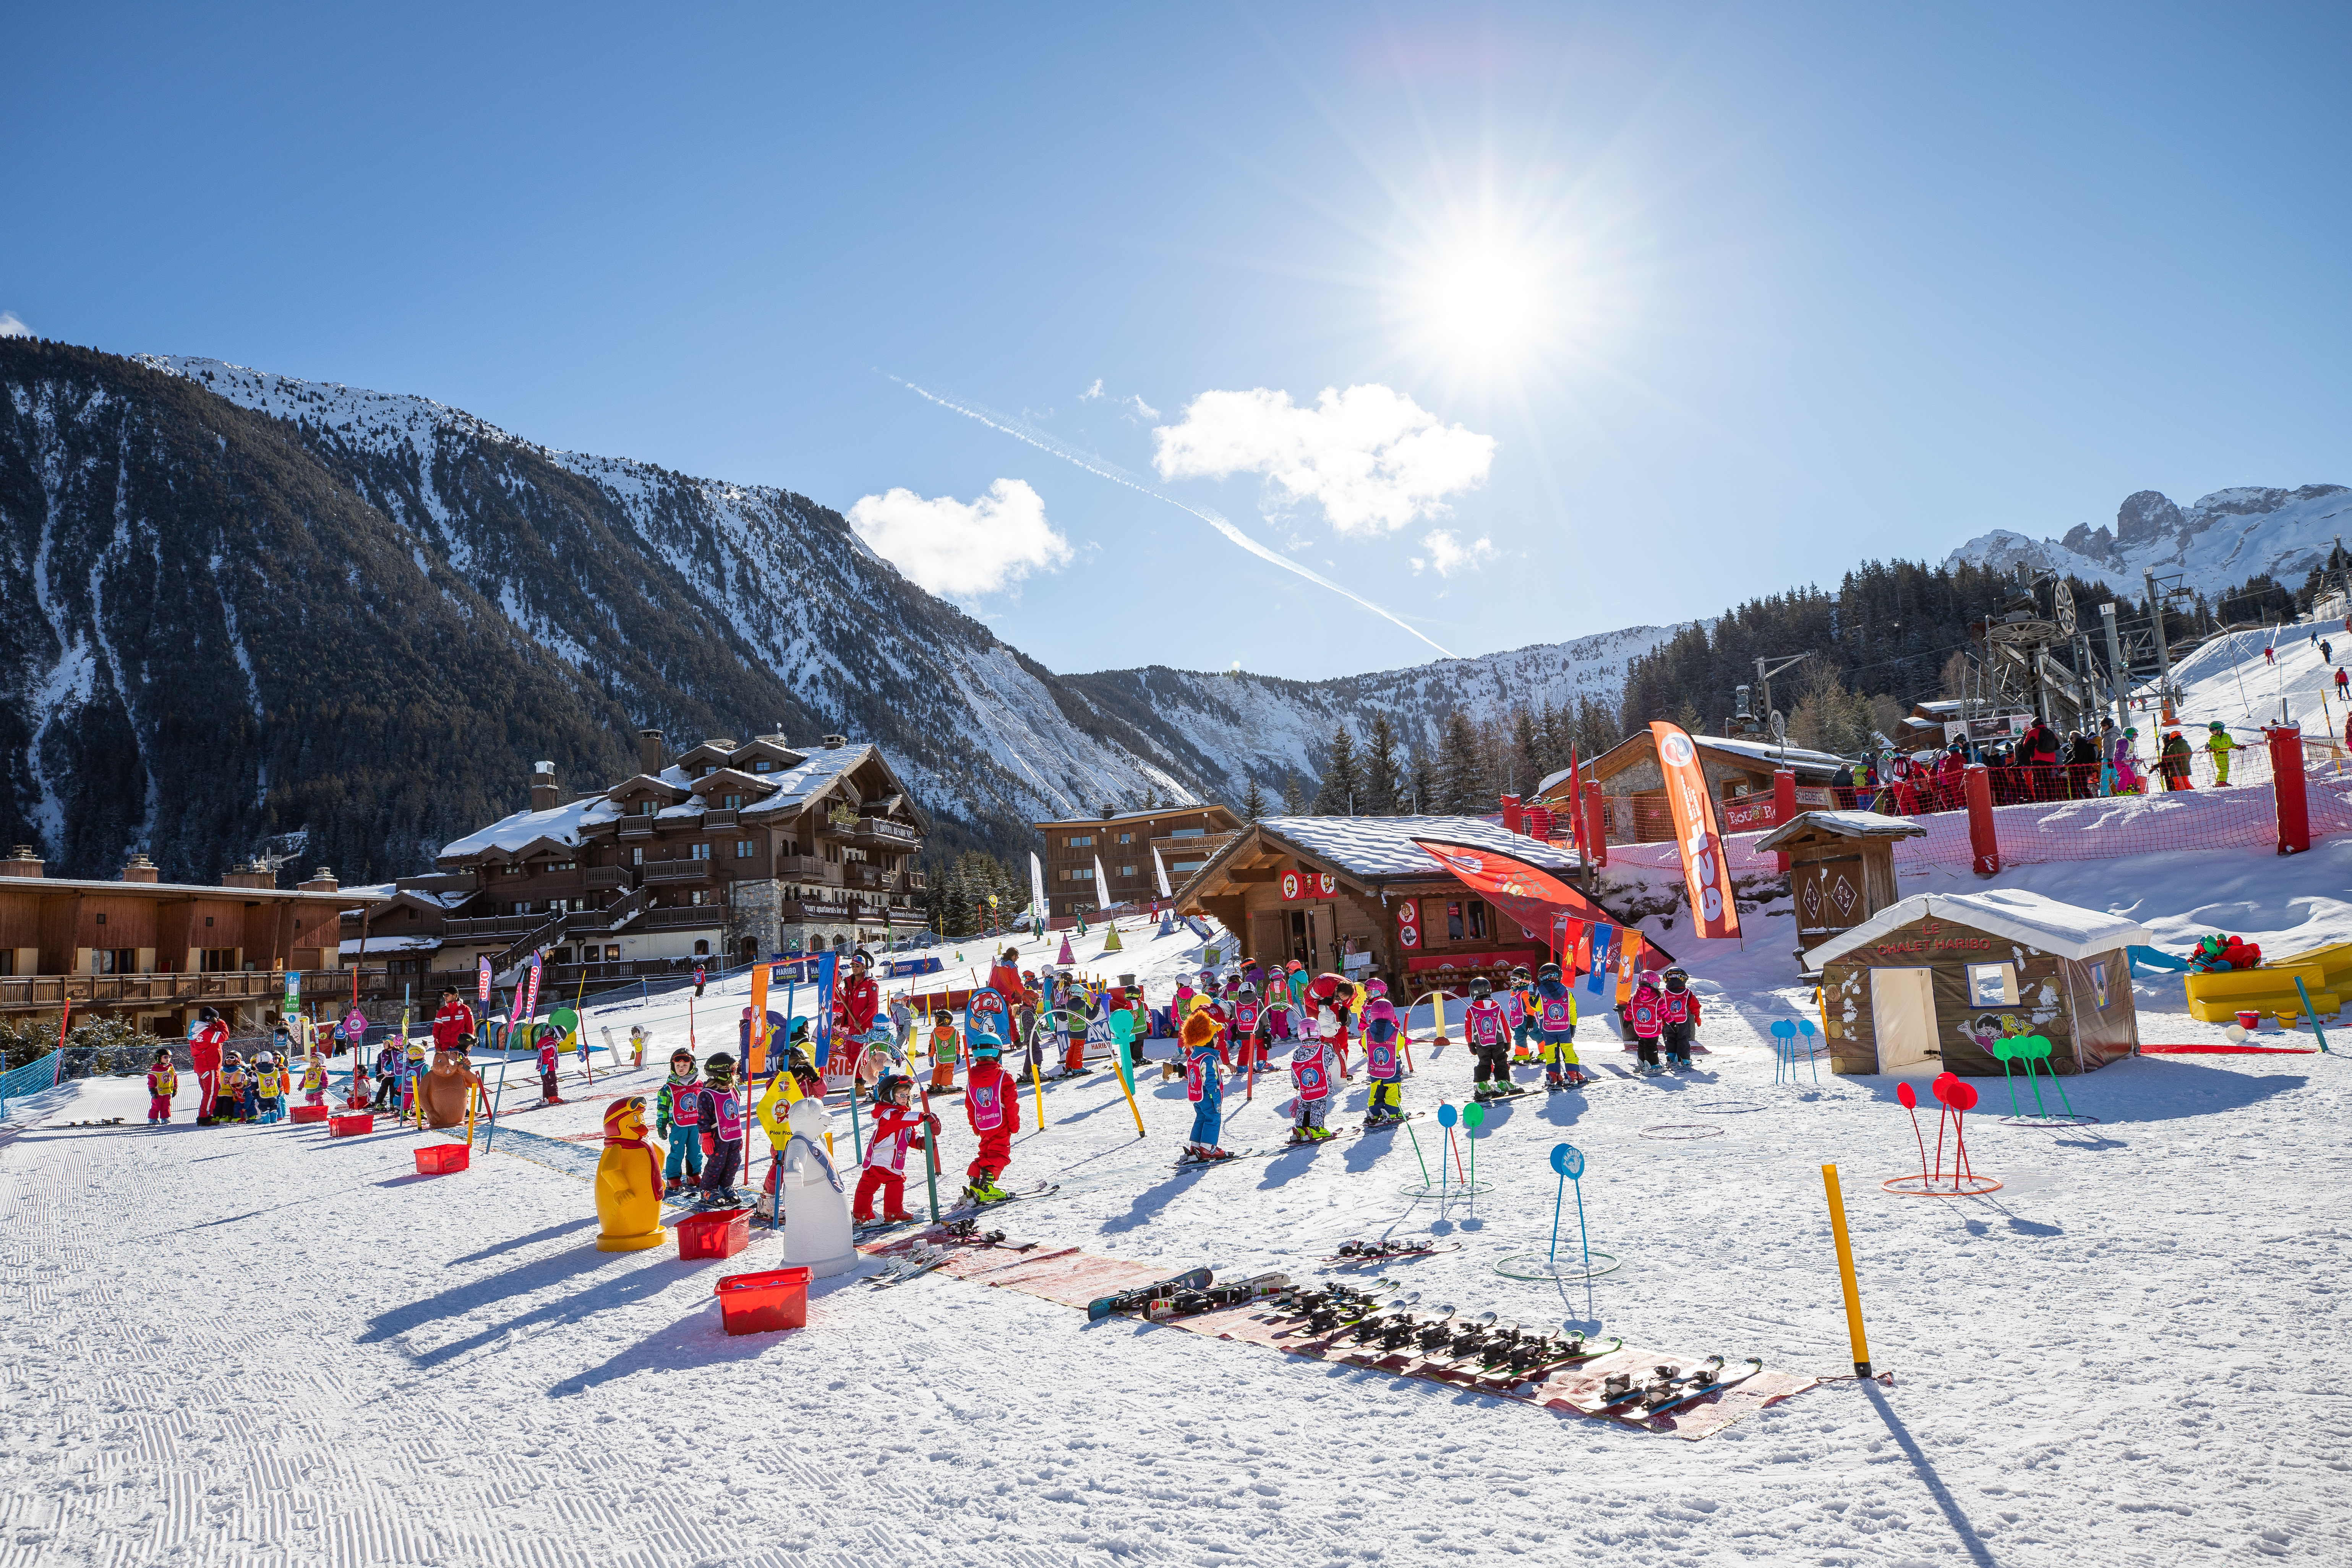 Children's ski school with Manali Lodge in the background